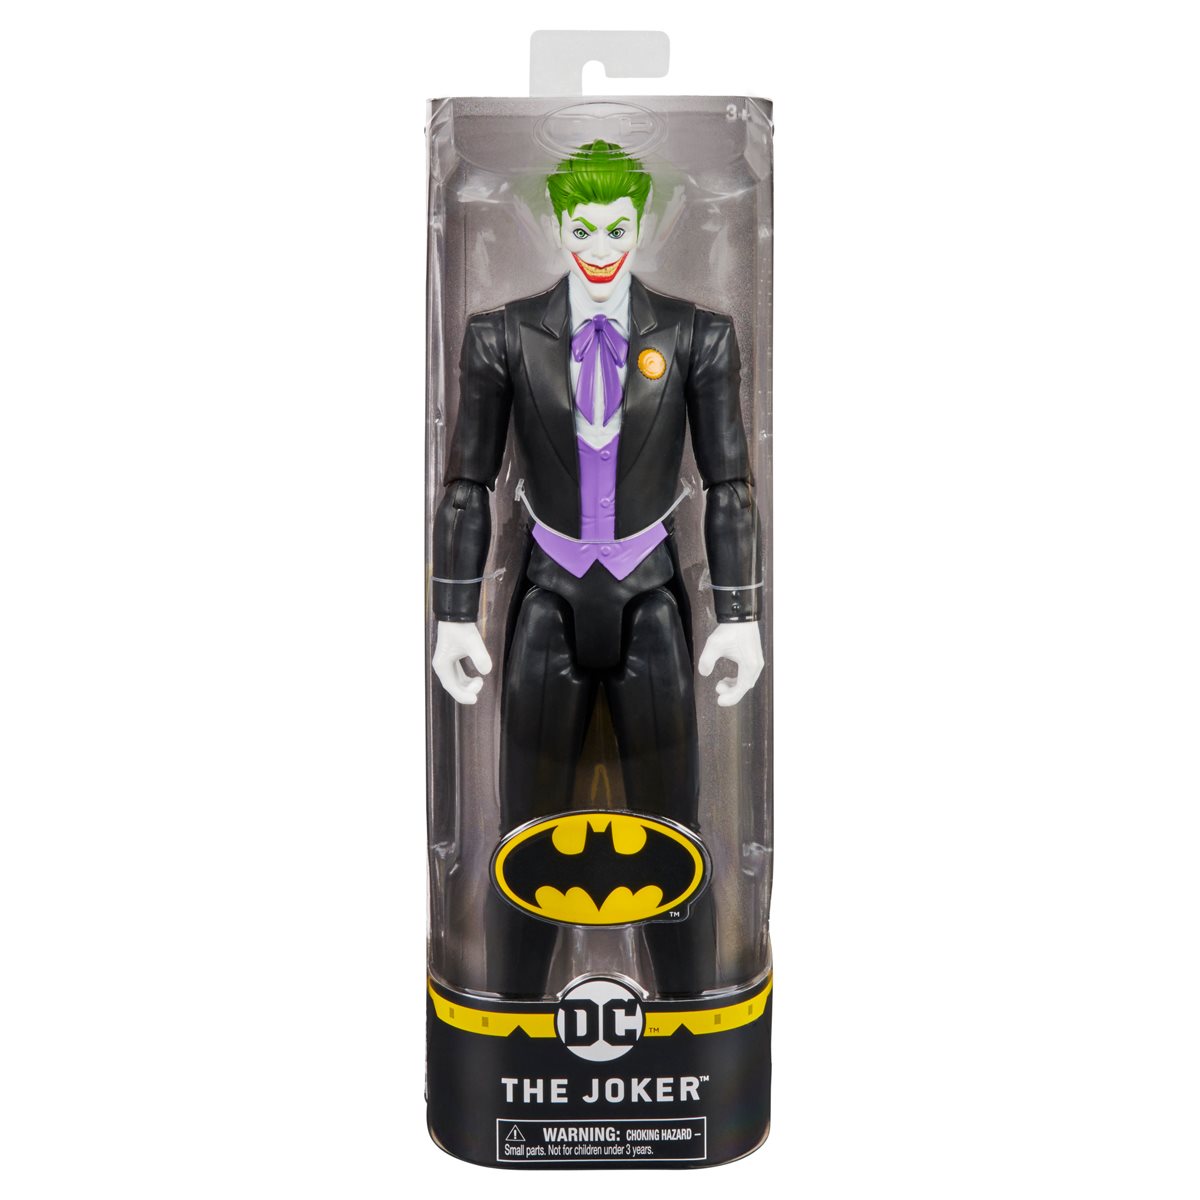 DC The Joker in Black Suit Action Figure for sale online Spin Master 